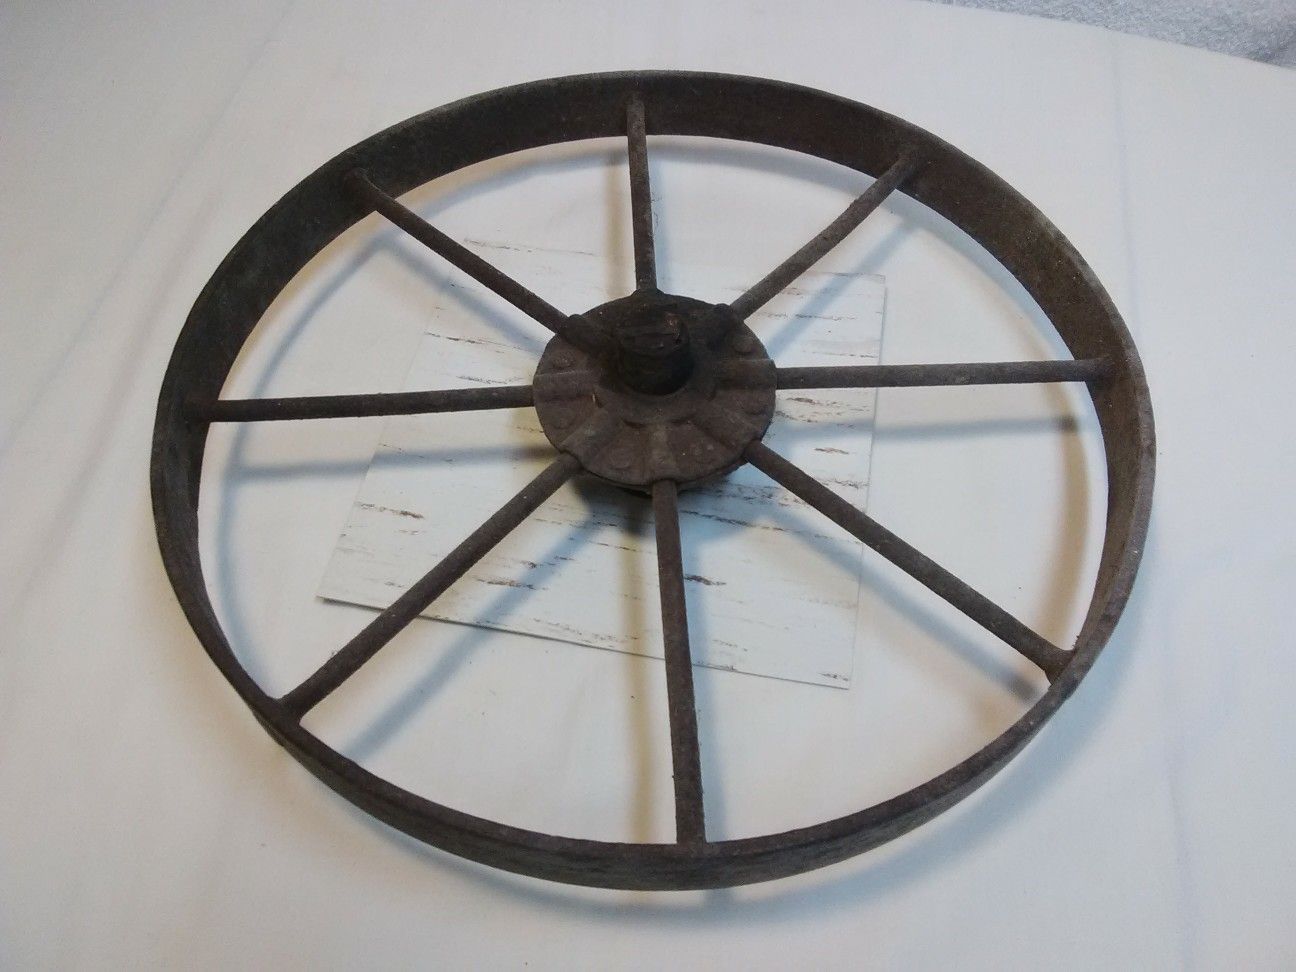 Antique Metal Wheel